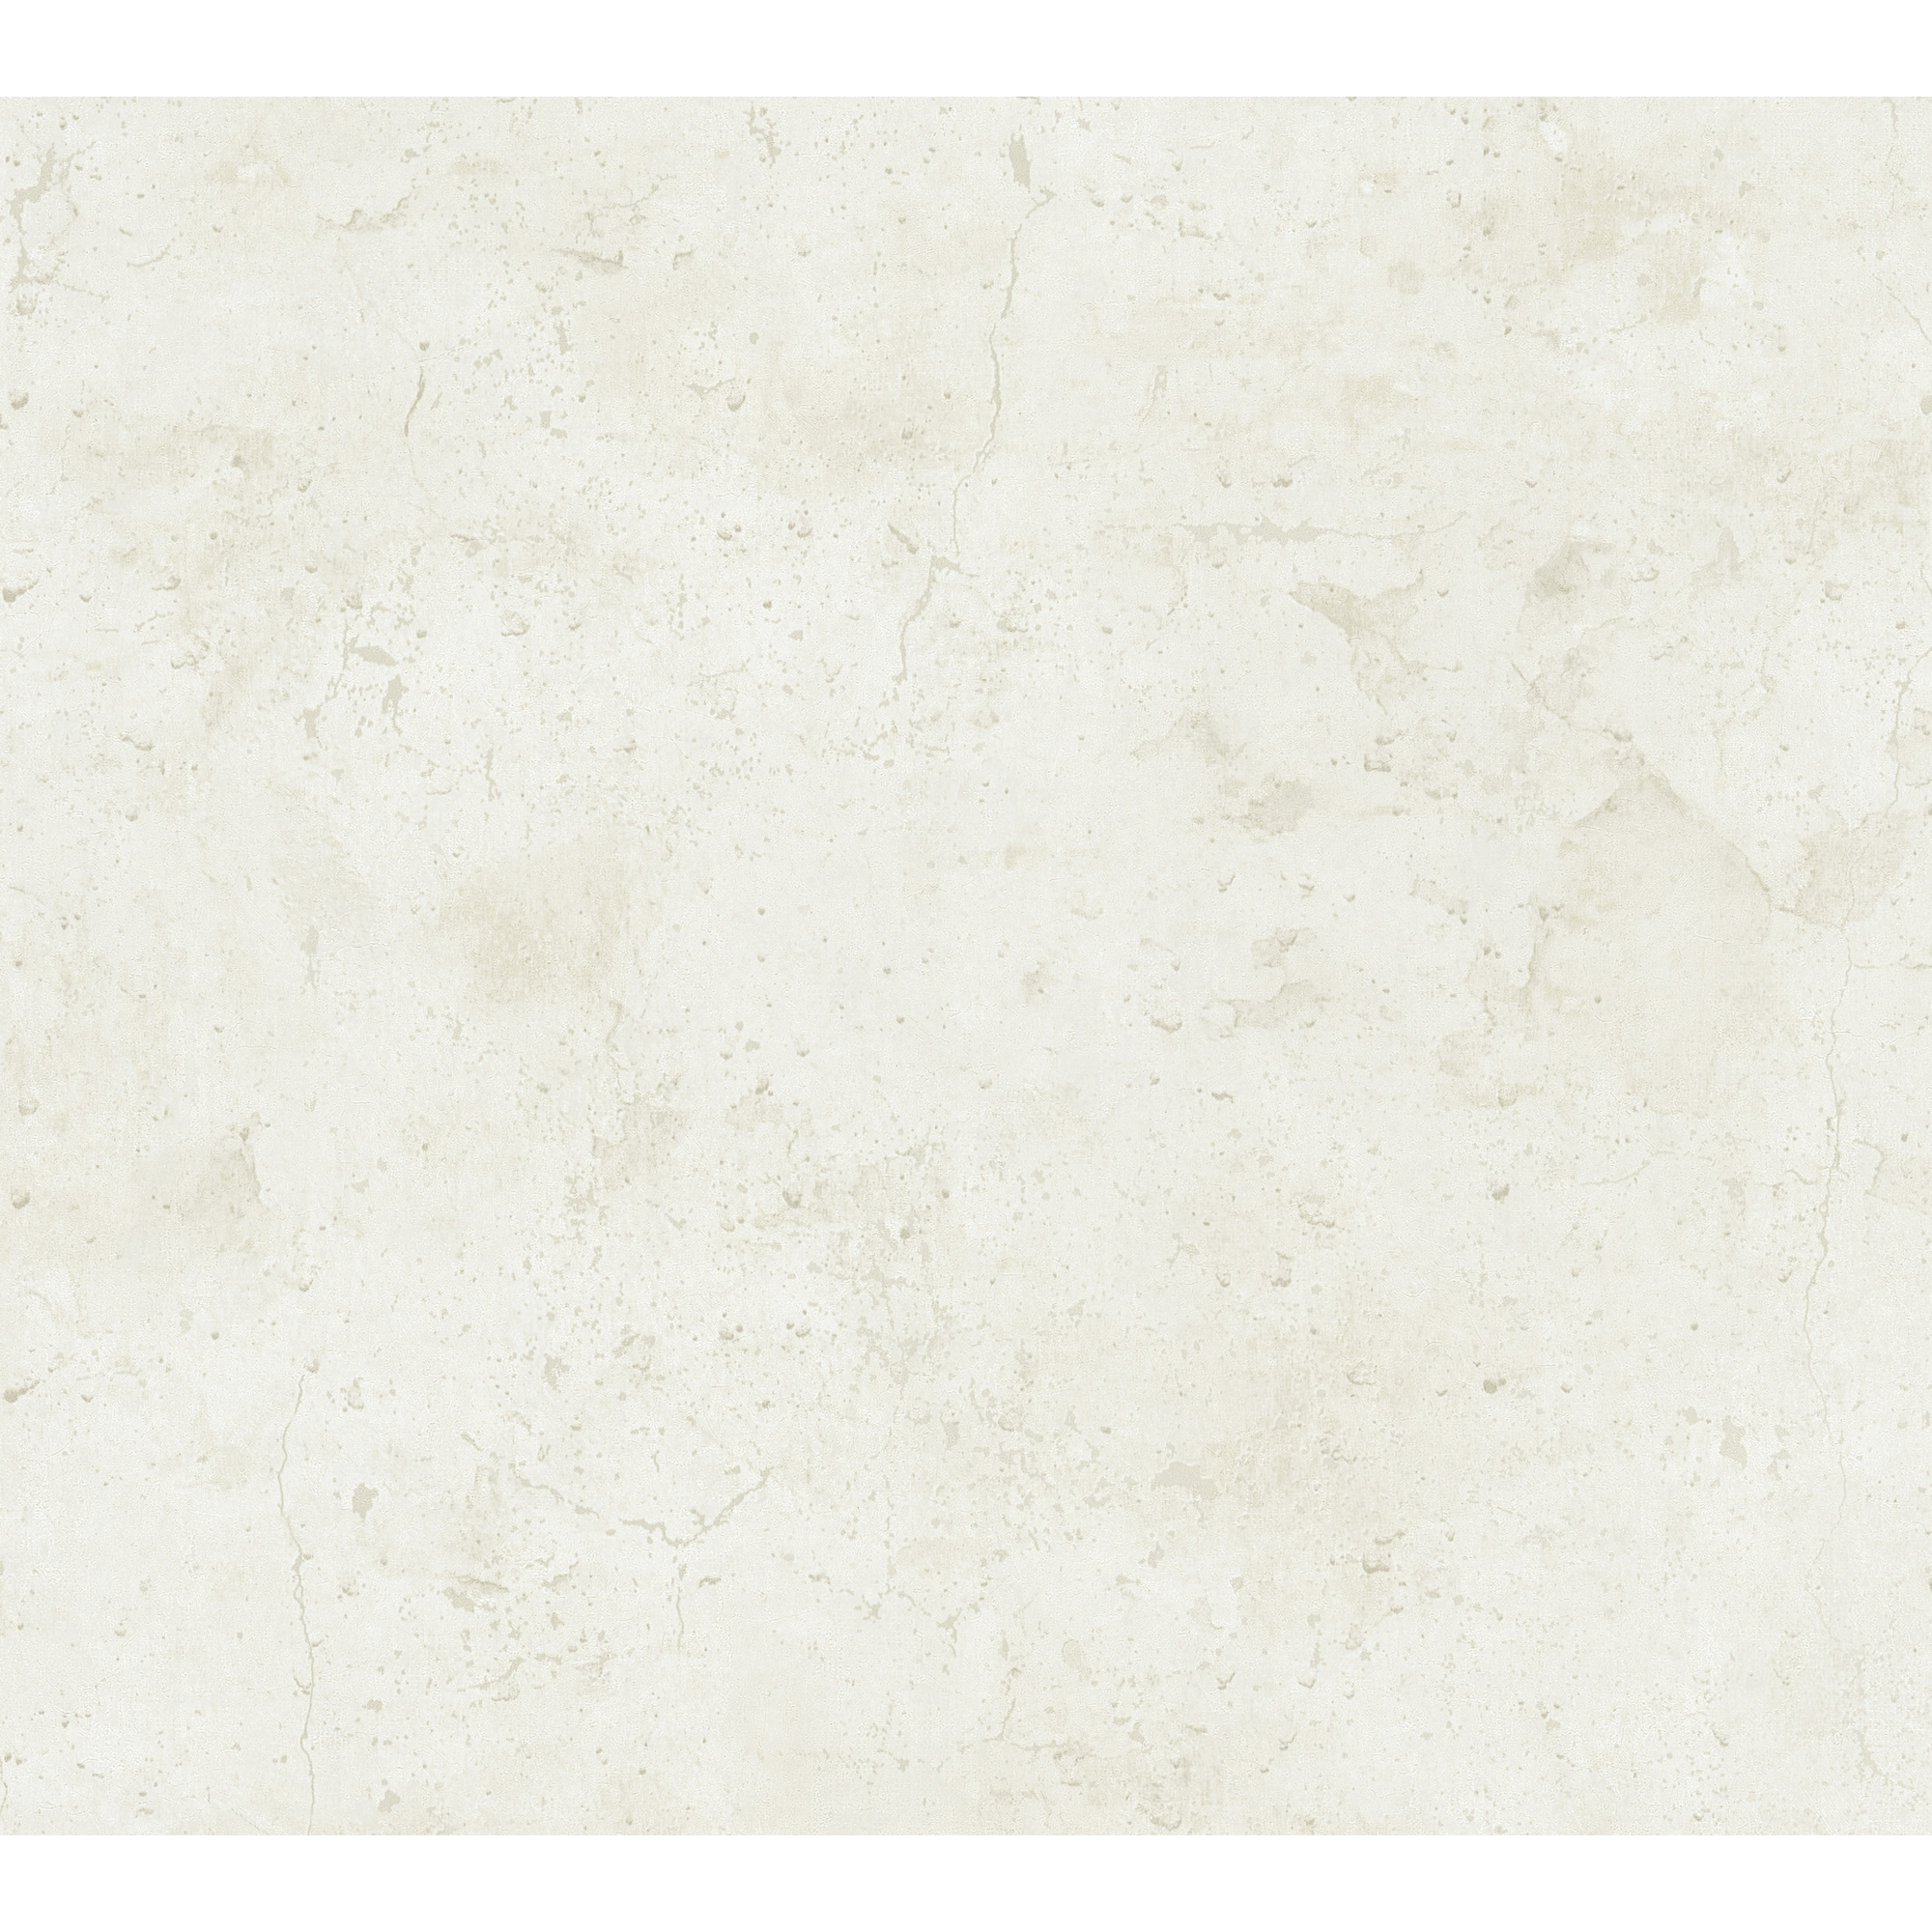 Vliestapete 'Shades of White' Betonoptik creme/weiß 10,05 x 0,53 m + product picture